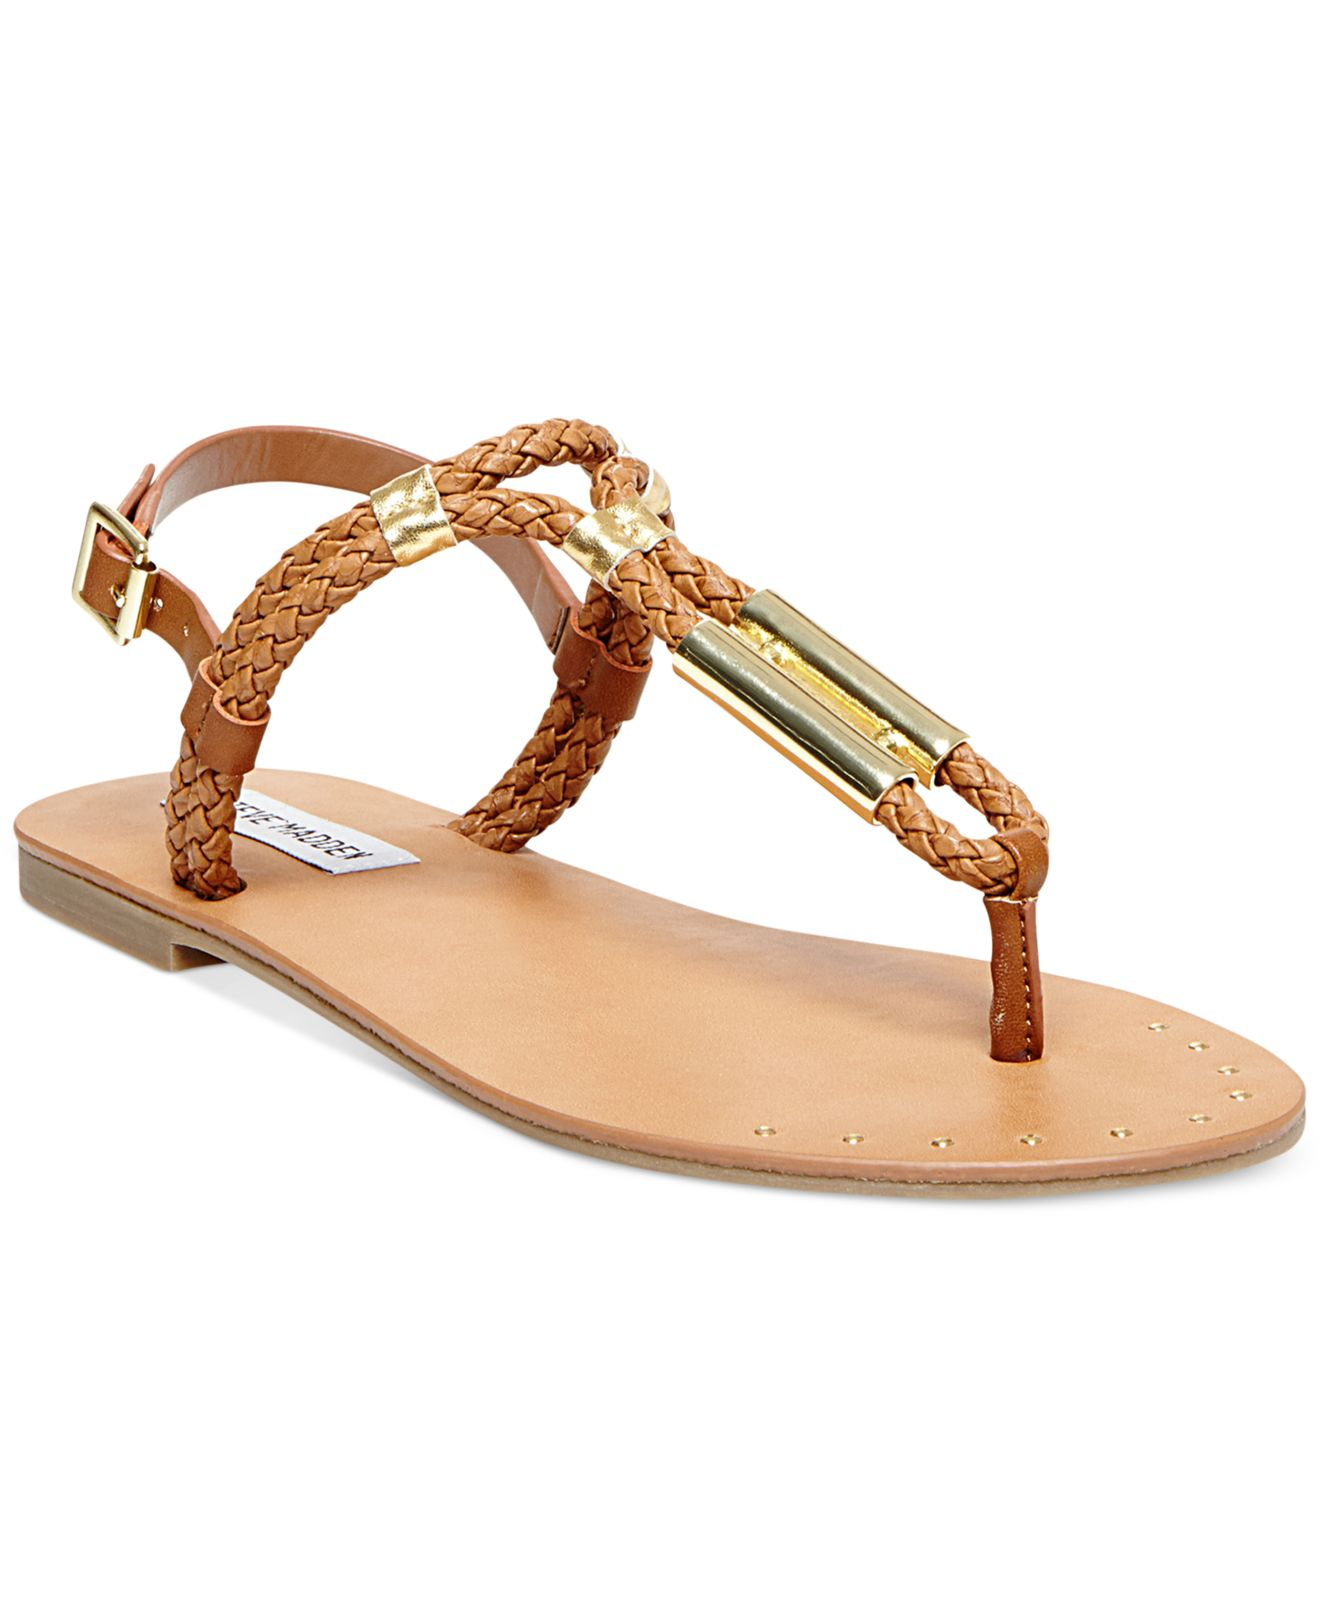 Lyst - Steve Madden Braidie Flat Thong Sandals in Brown